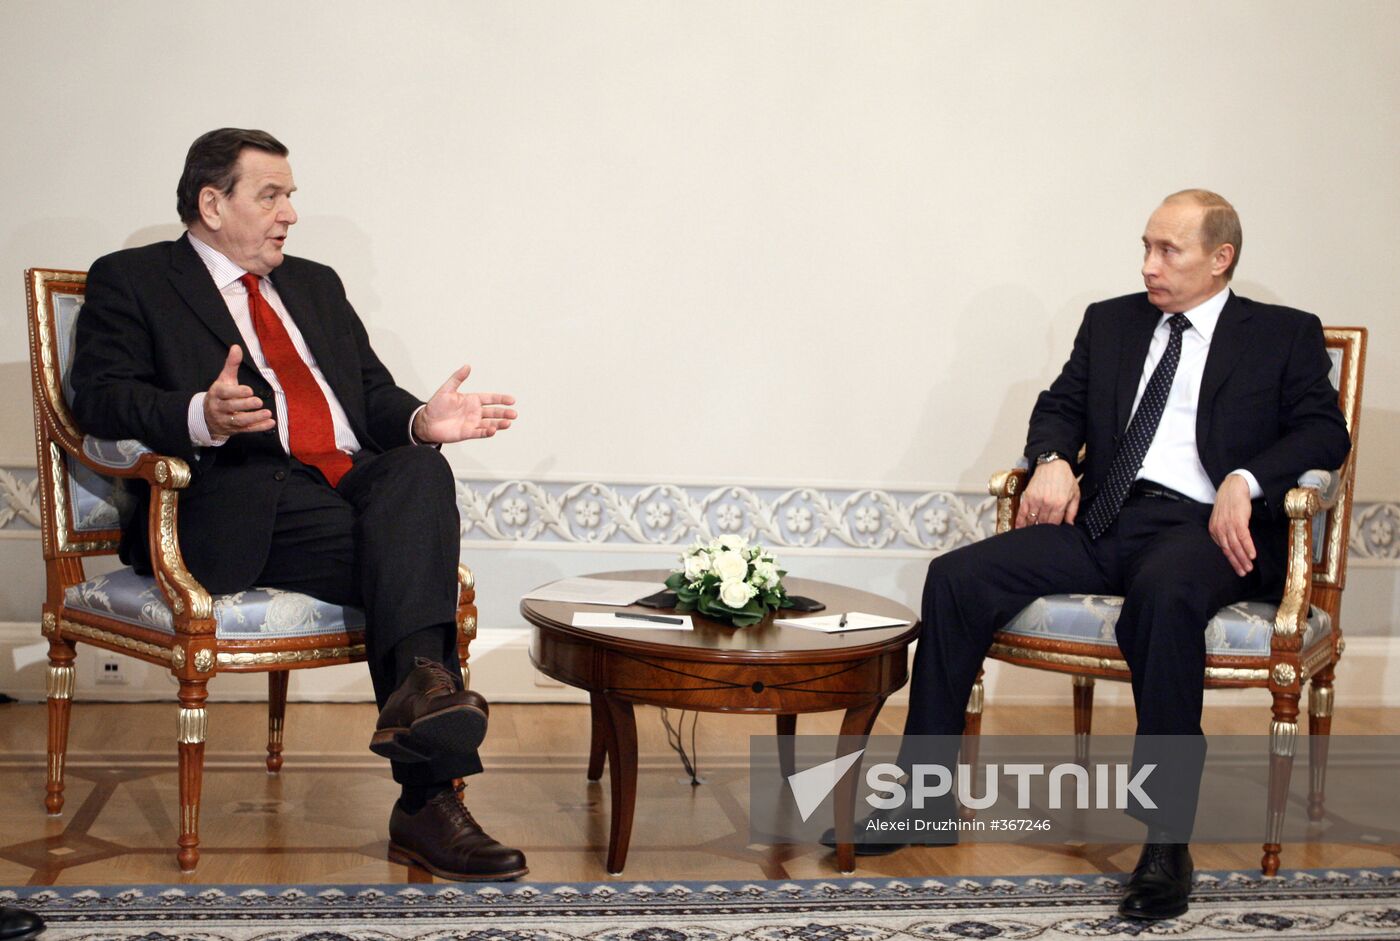 Vladimir Putin meets with Gerhard Schroeder